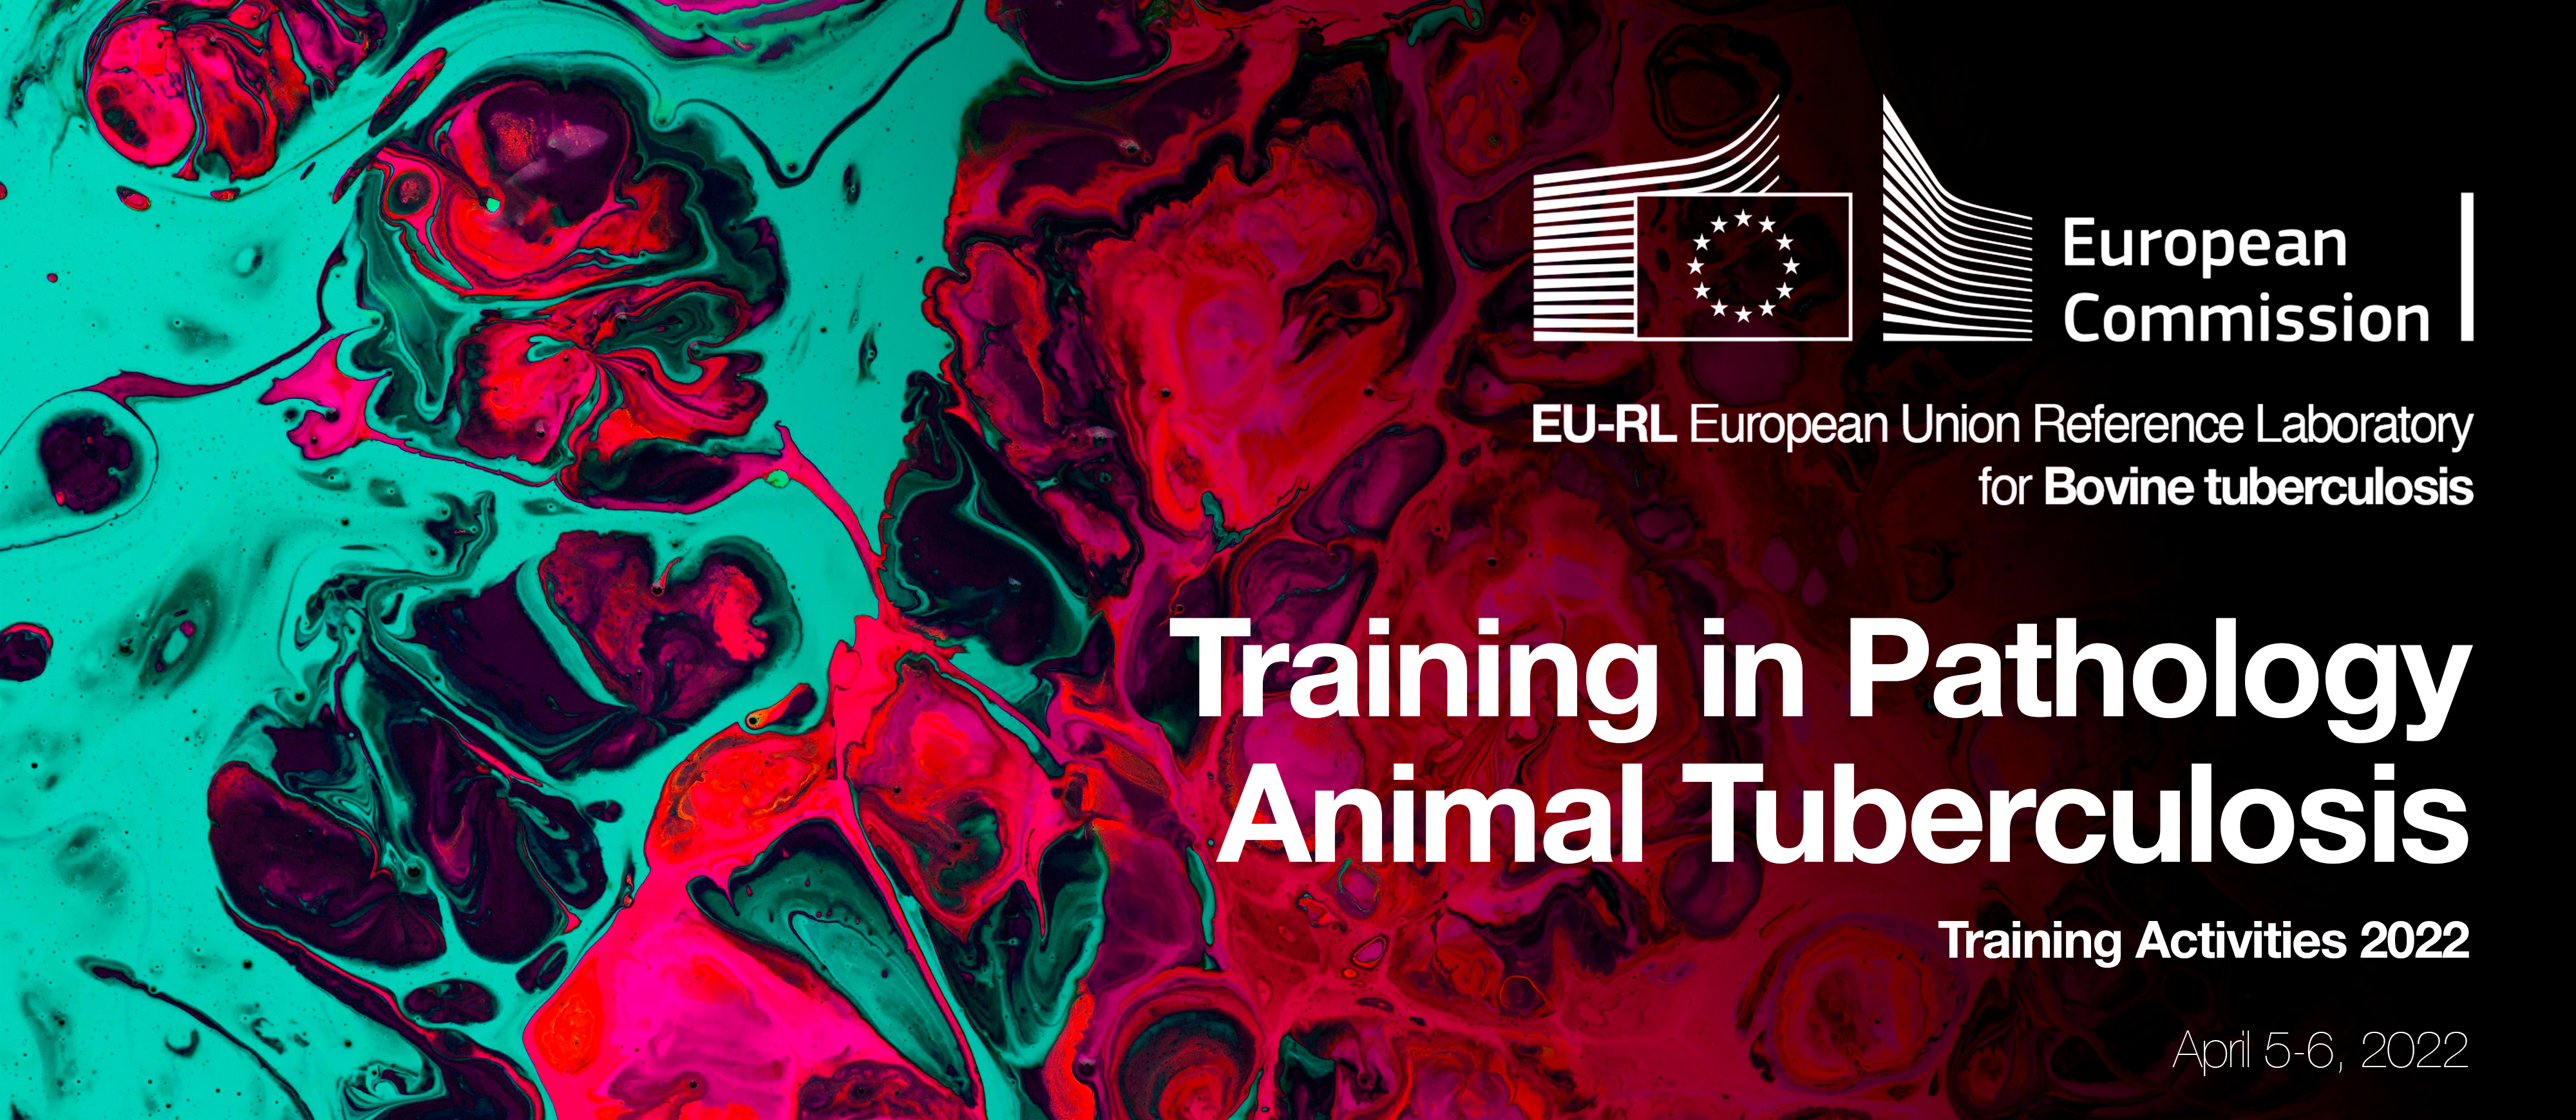 Training Session in Pathology Animal Tuberculosis